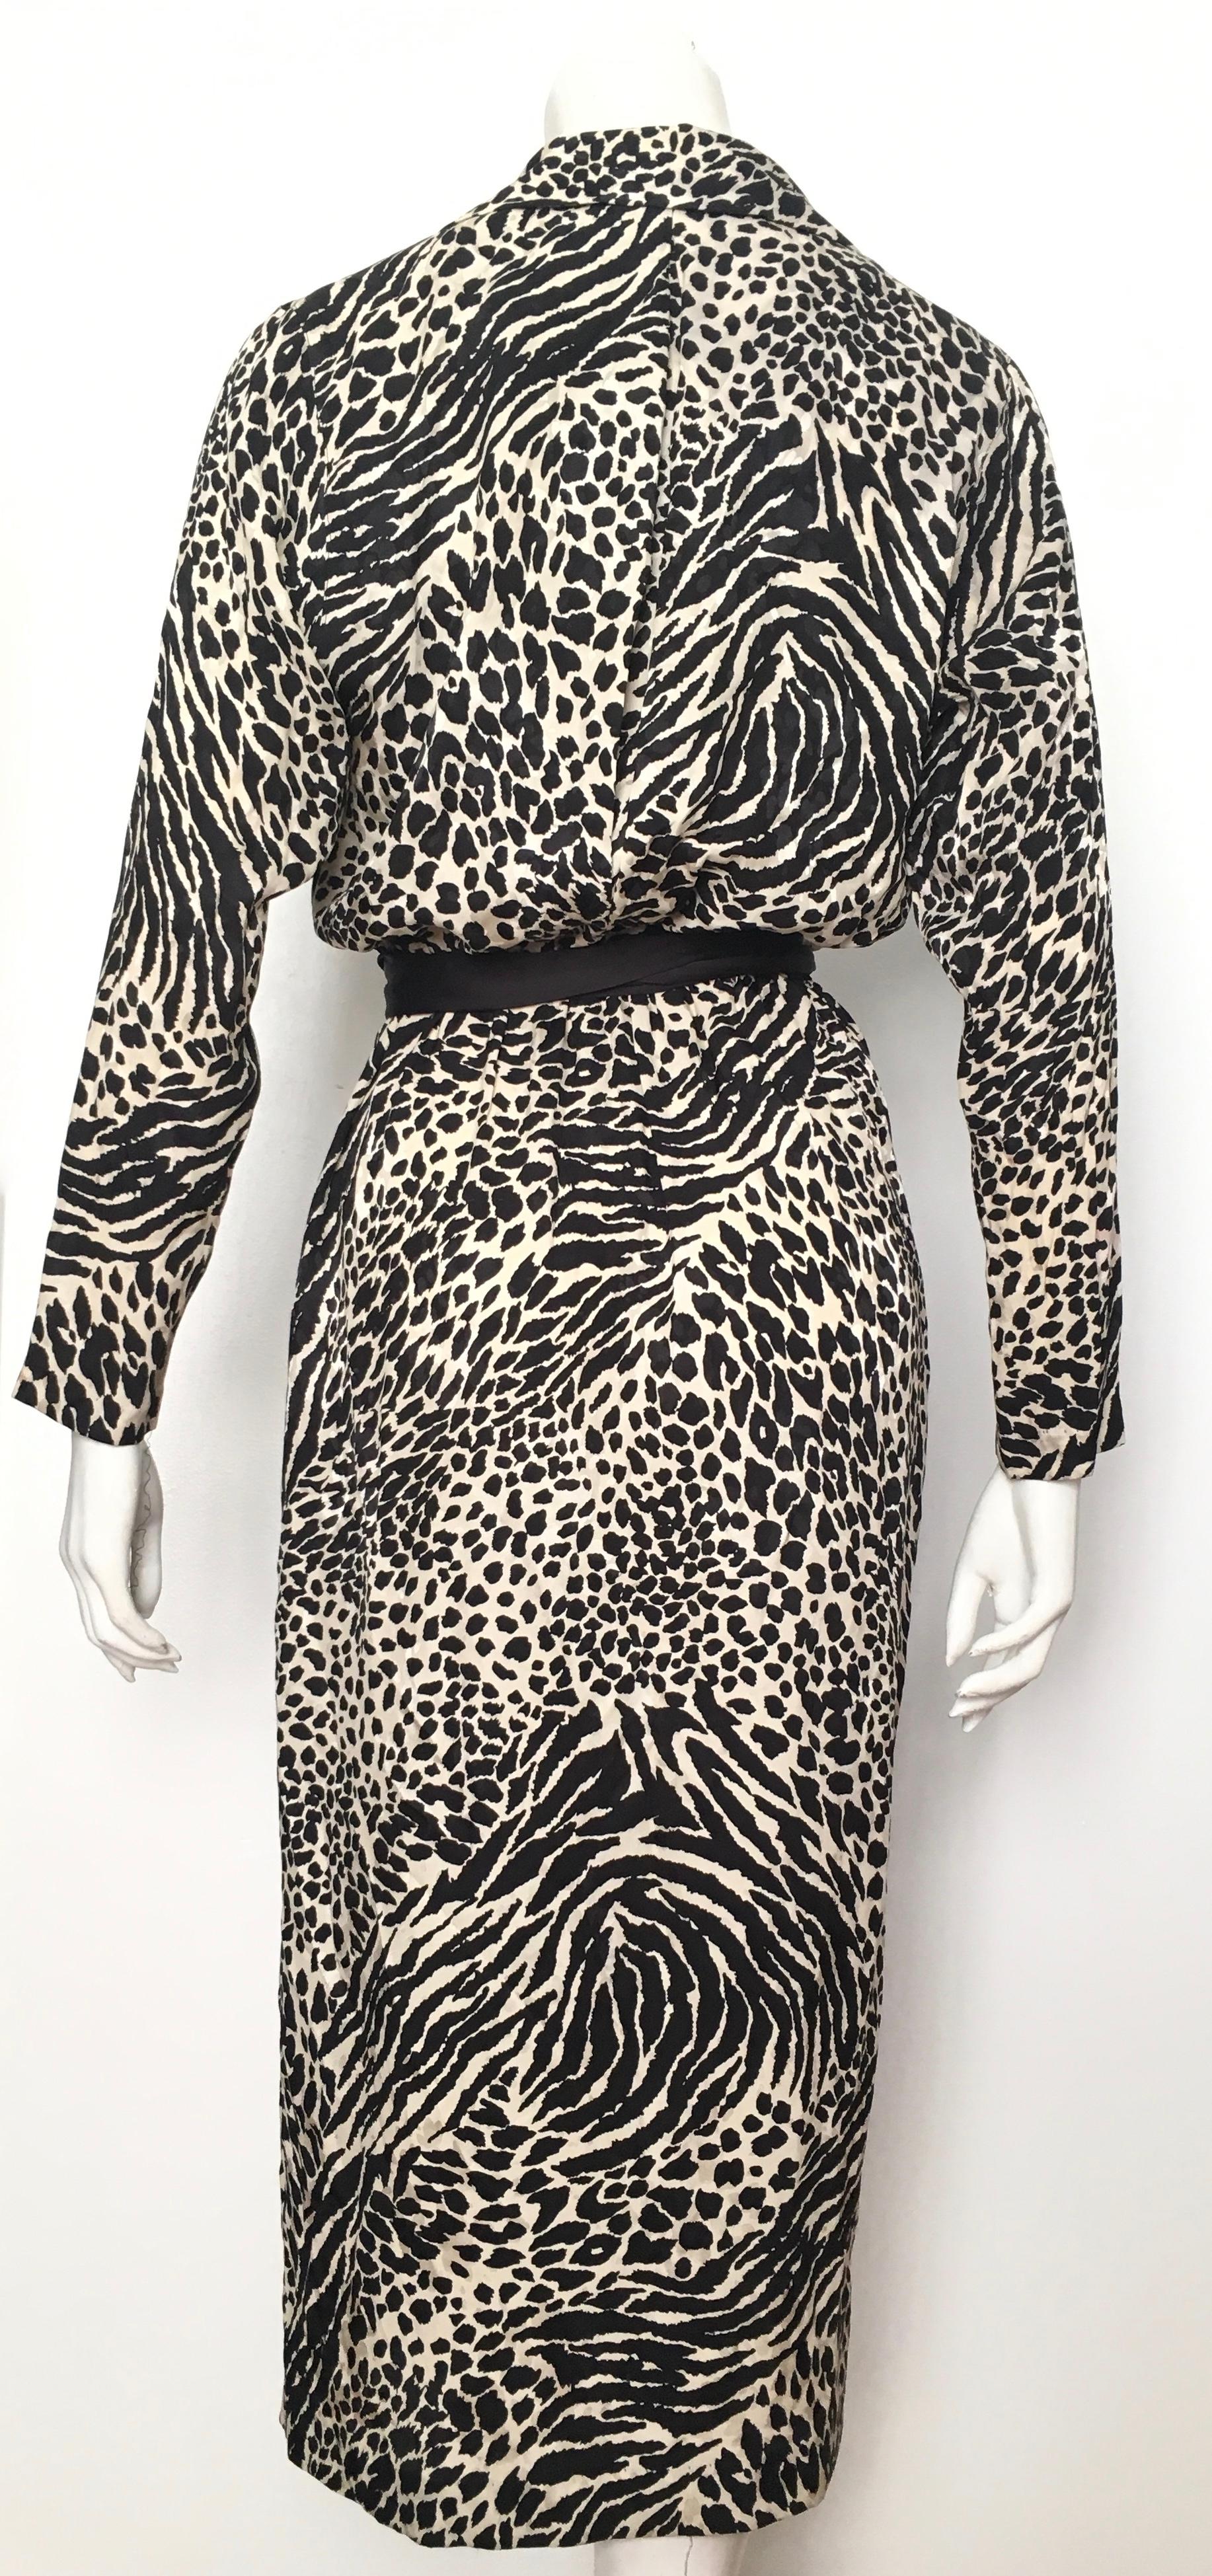 Geoffrey Beene for Lillie Rubin 1980 Animal Print Silk Dress Size 6. For Sale 6